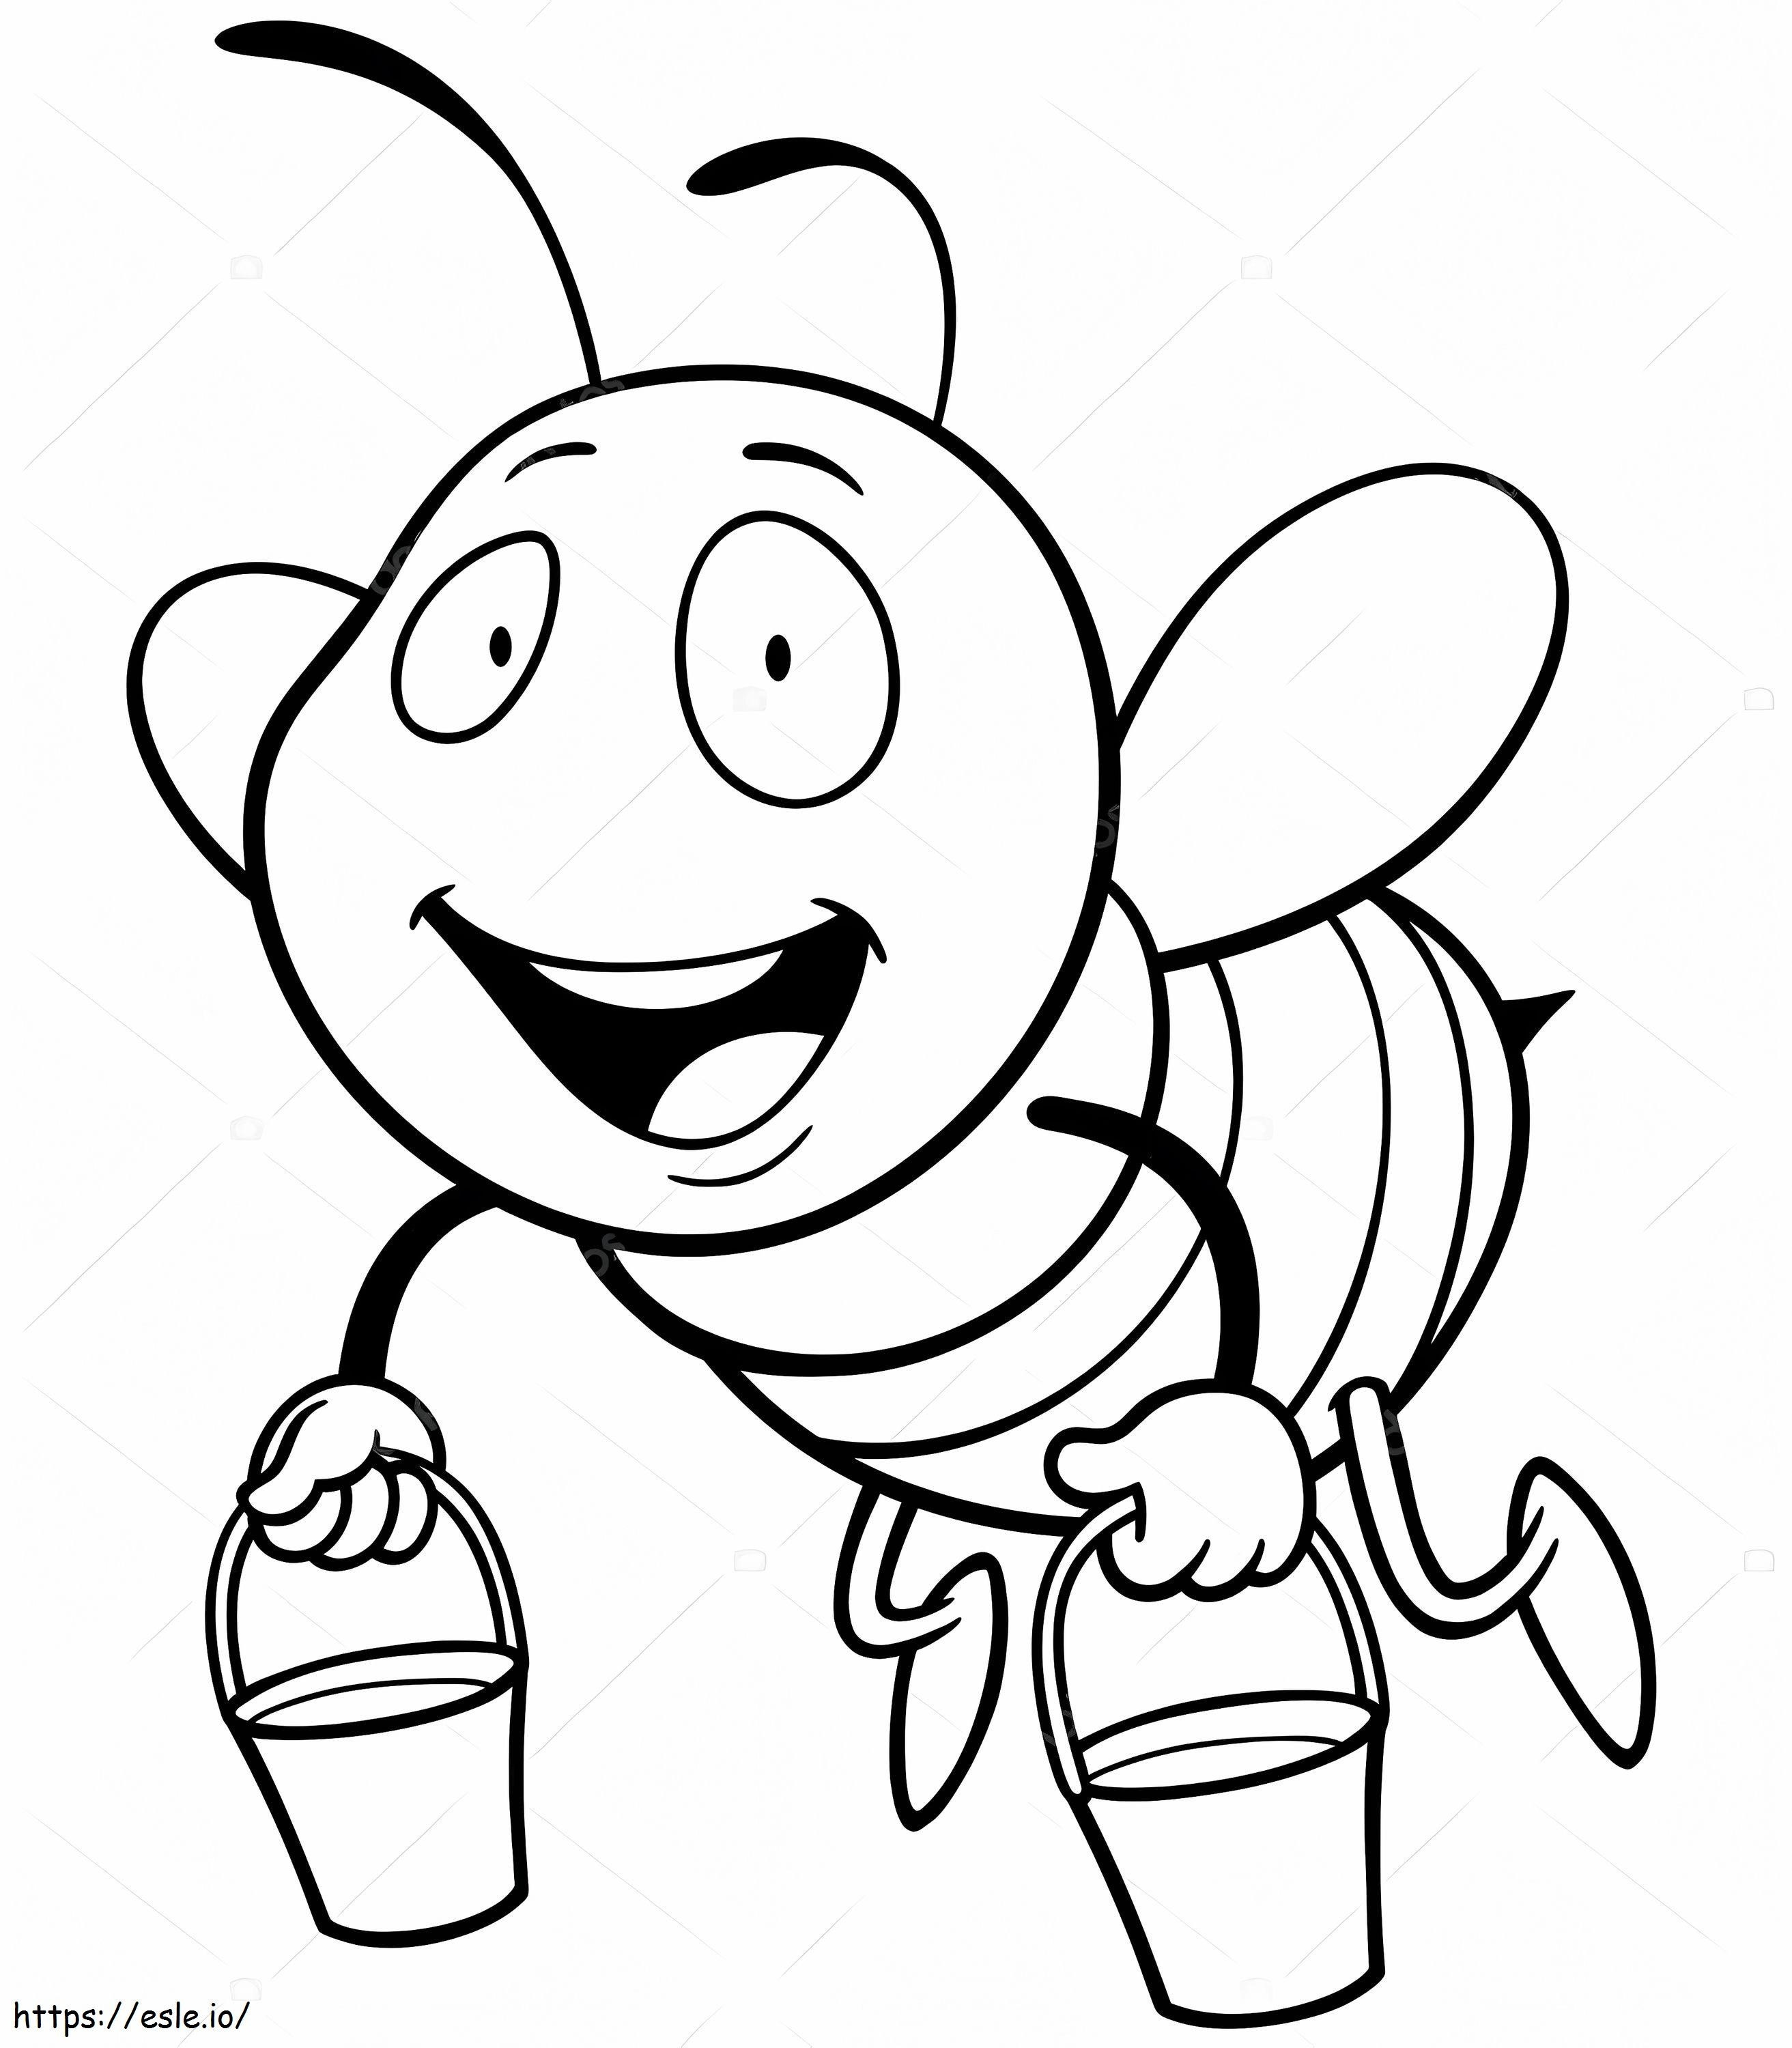 Depositphotos_78908214 Stock Illustration Cartoon Bee coloring page